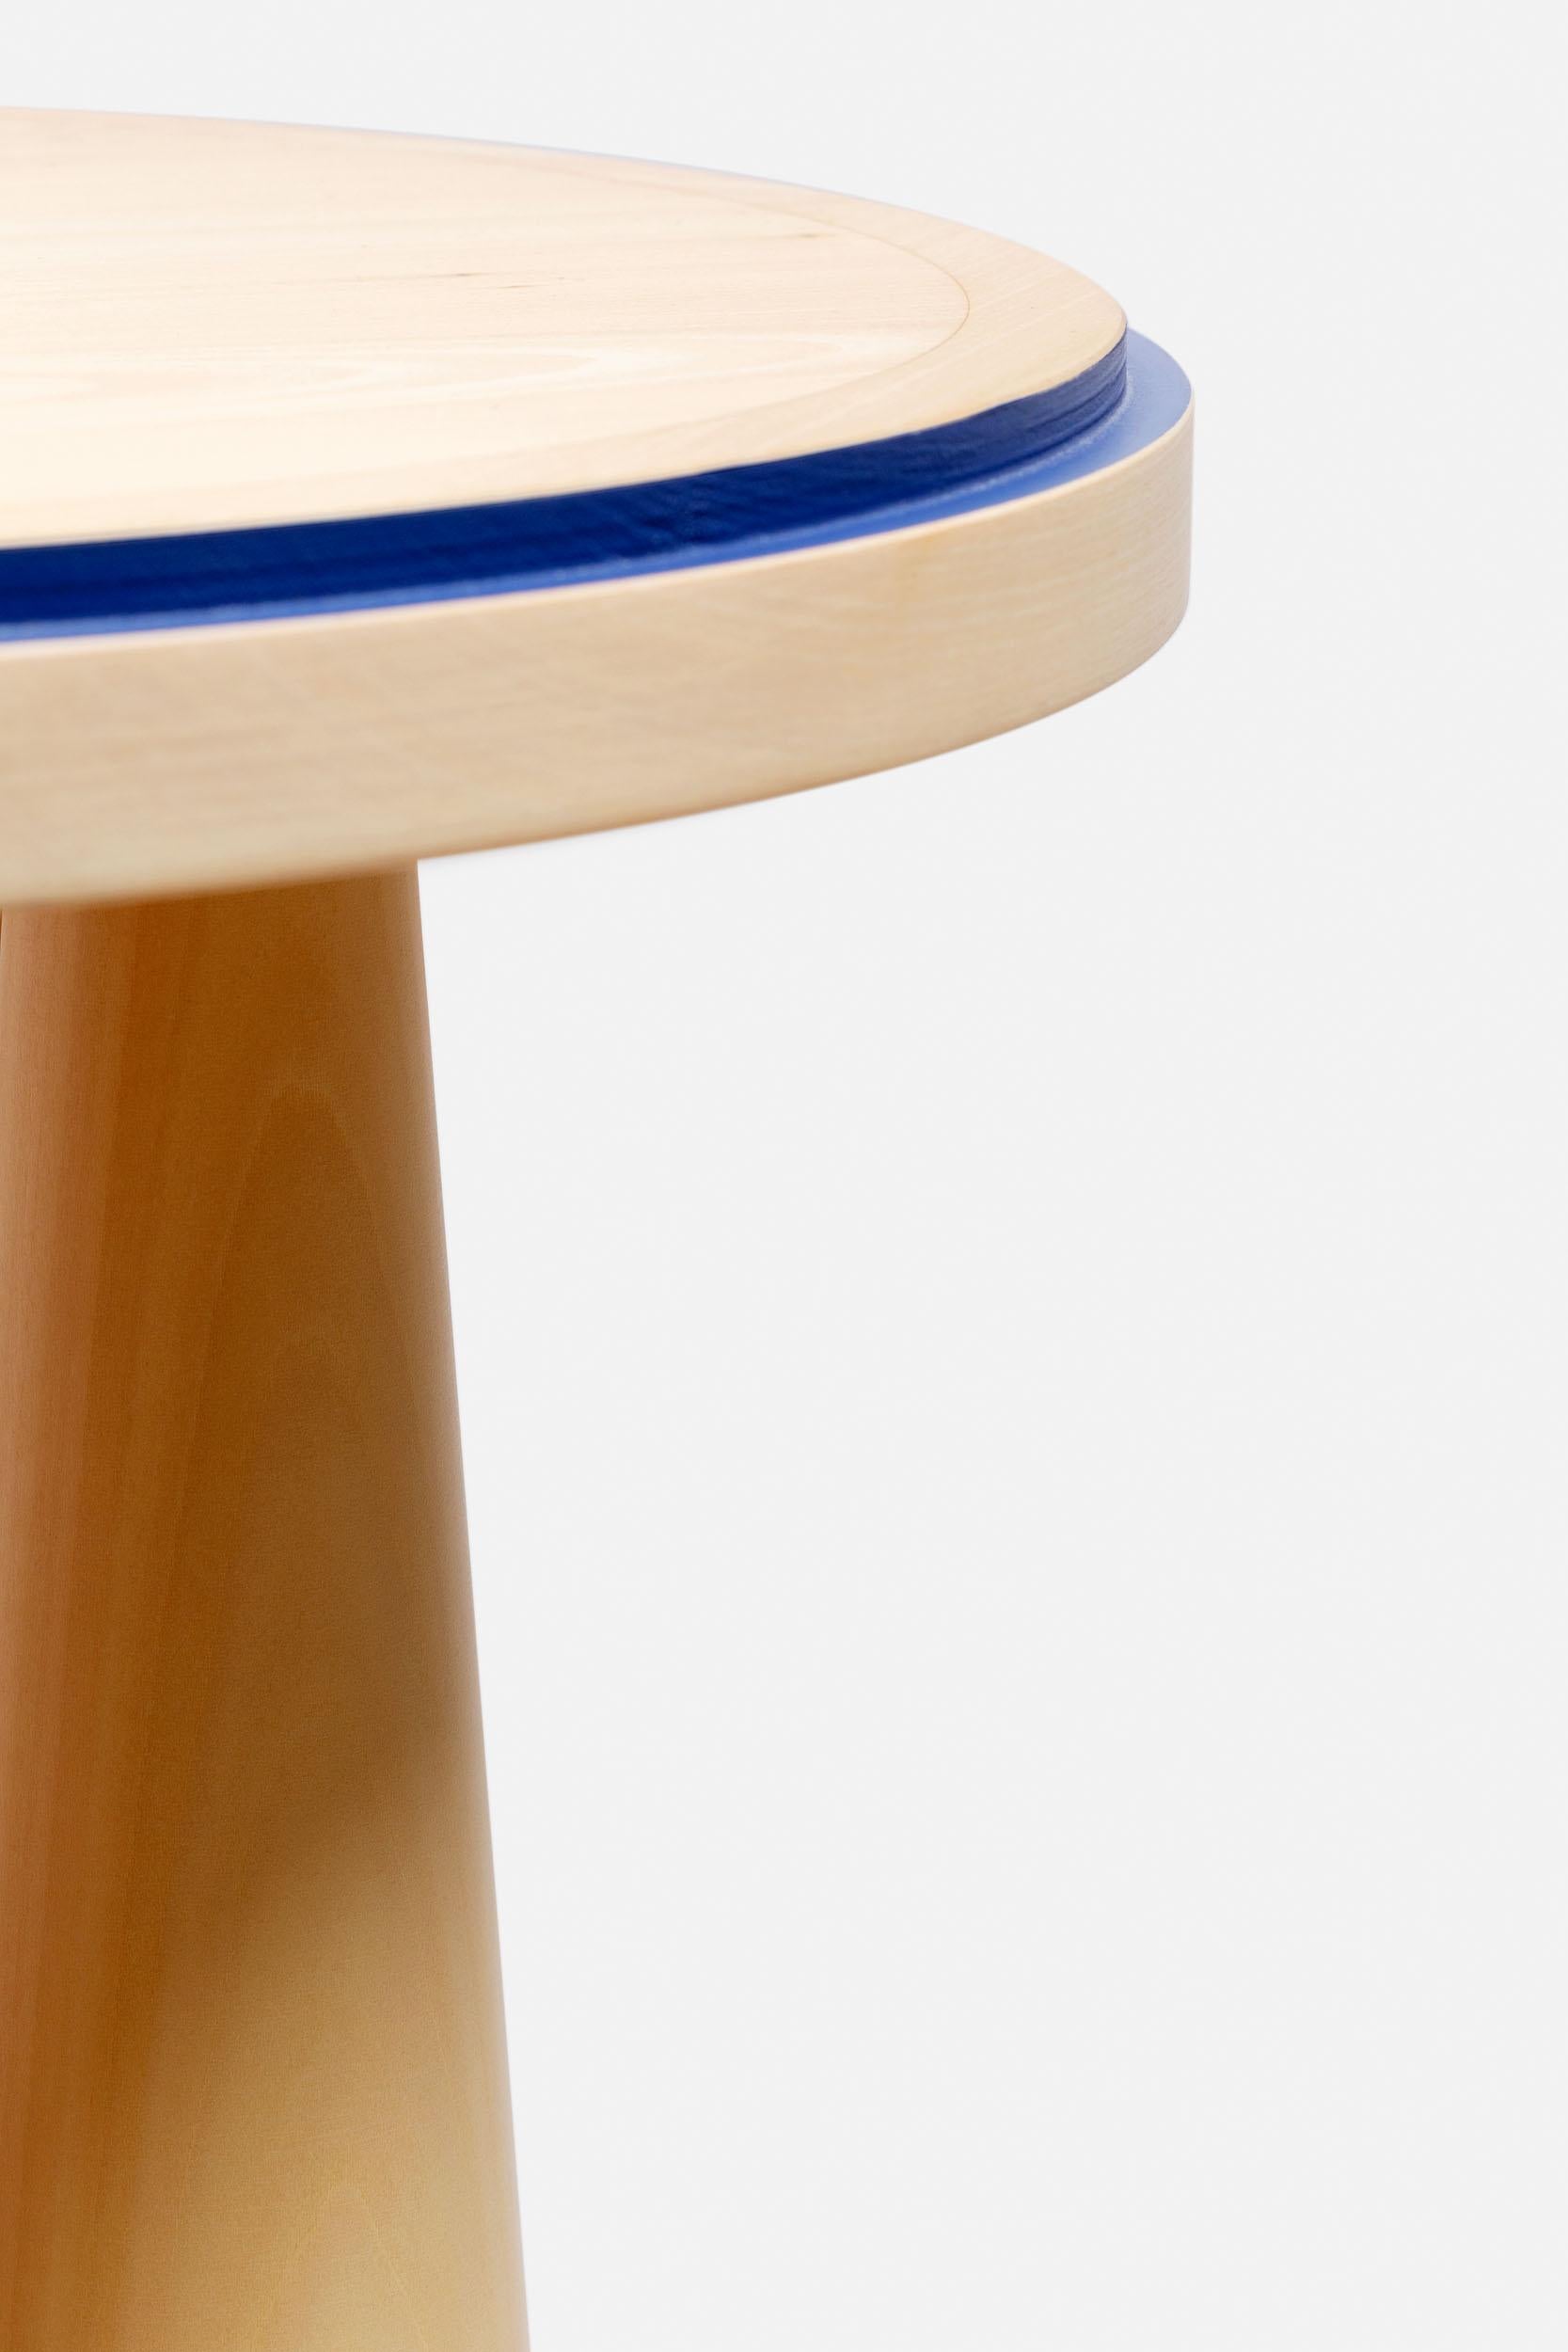 Wood Bogdan Medium Coffee Table by Studio Intervallo For Sale